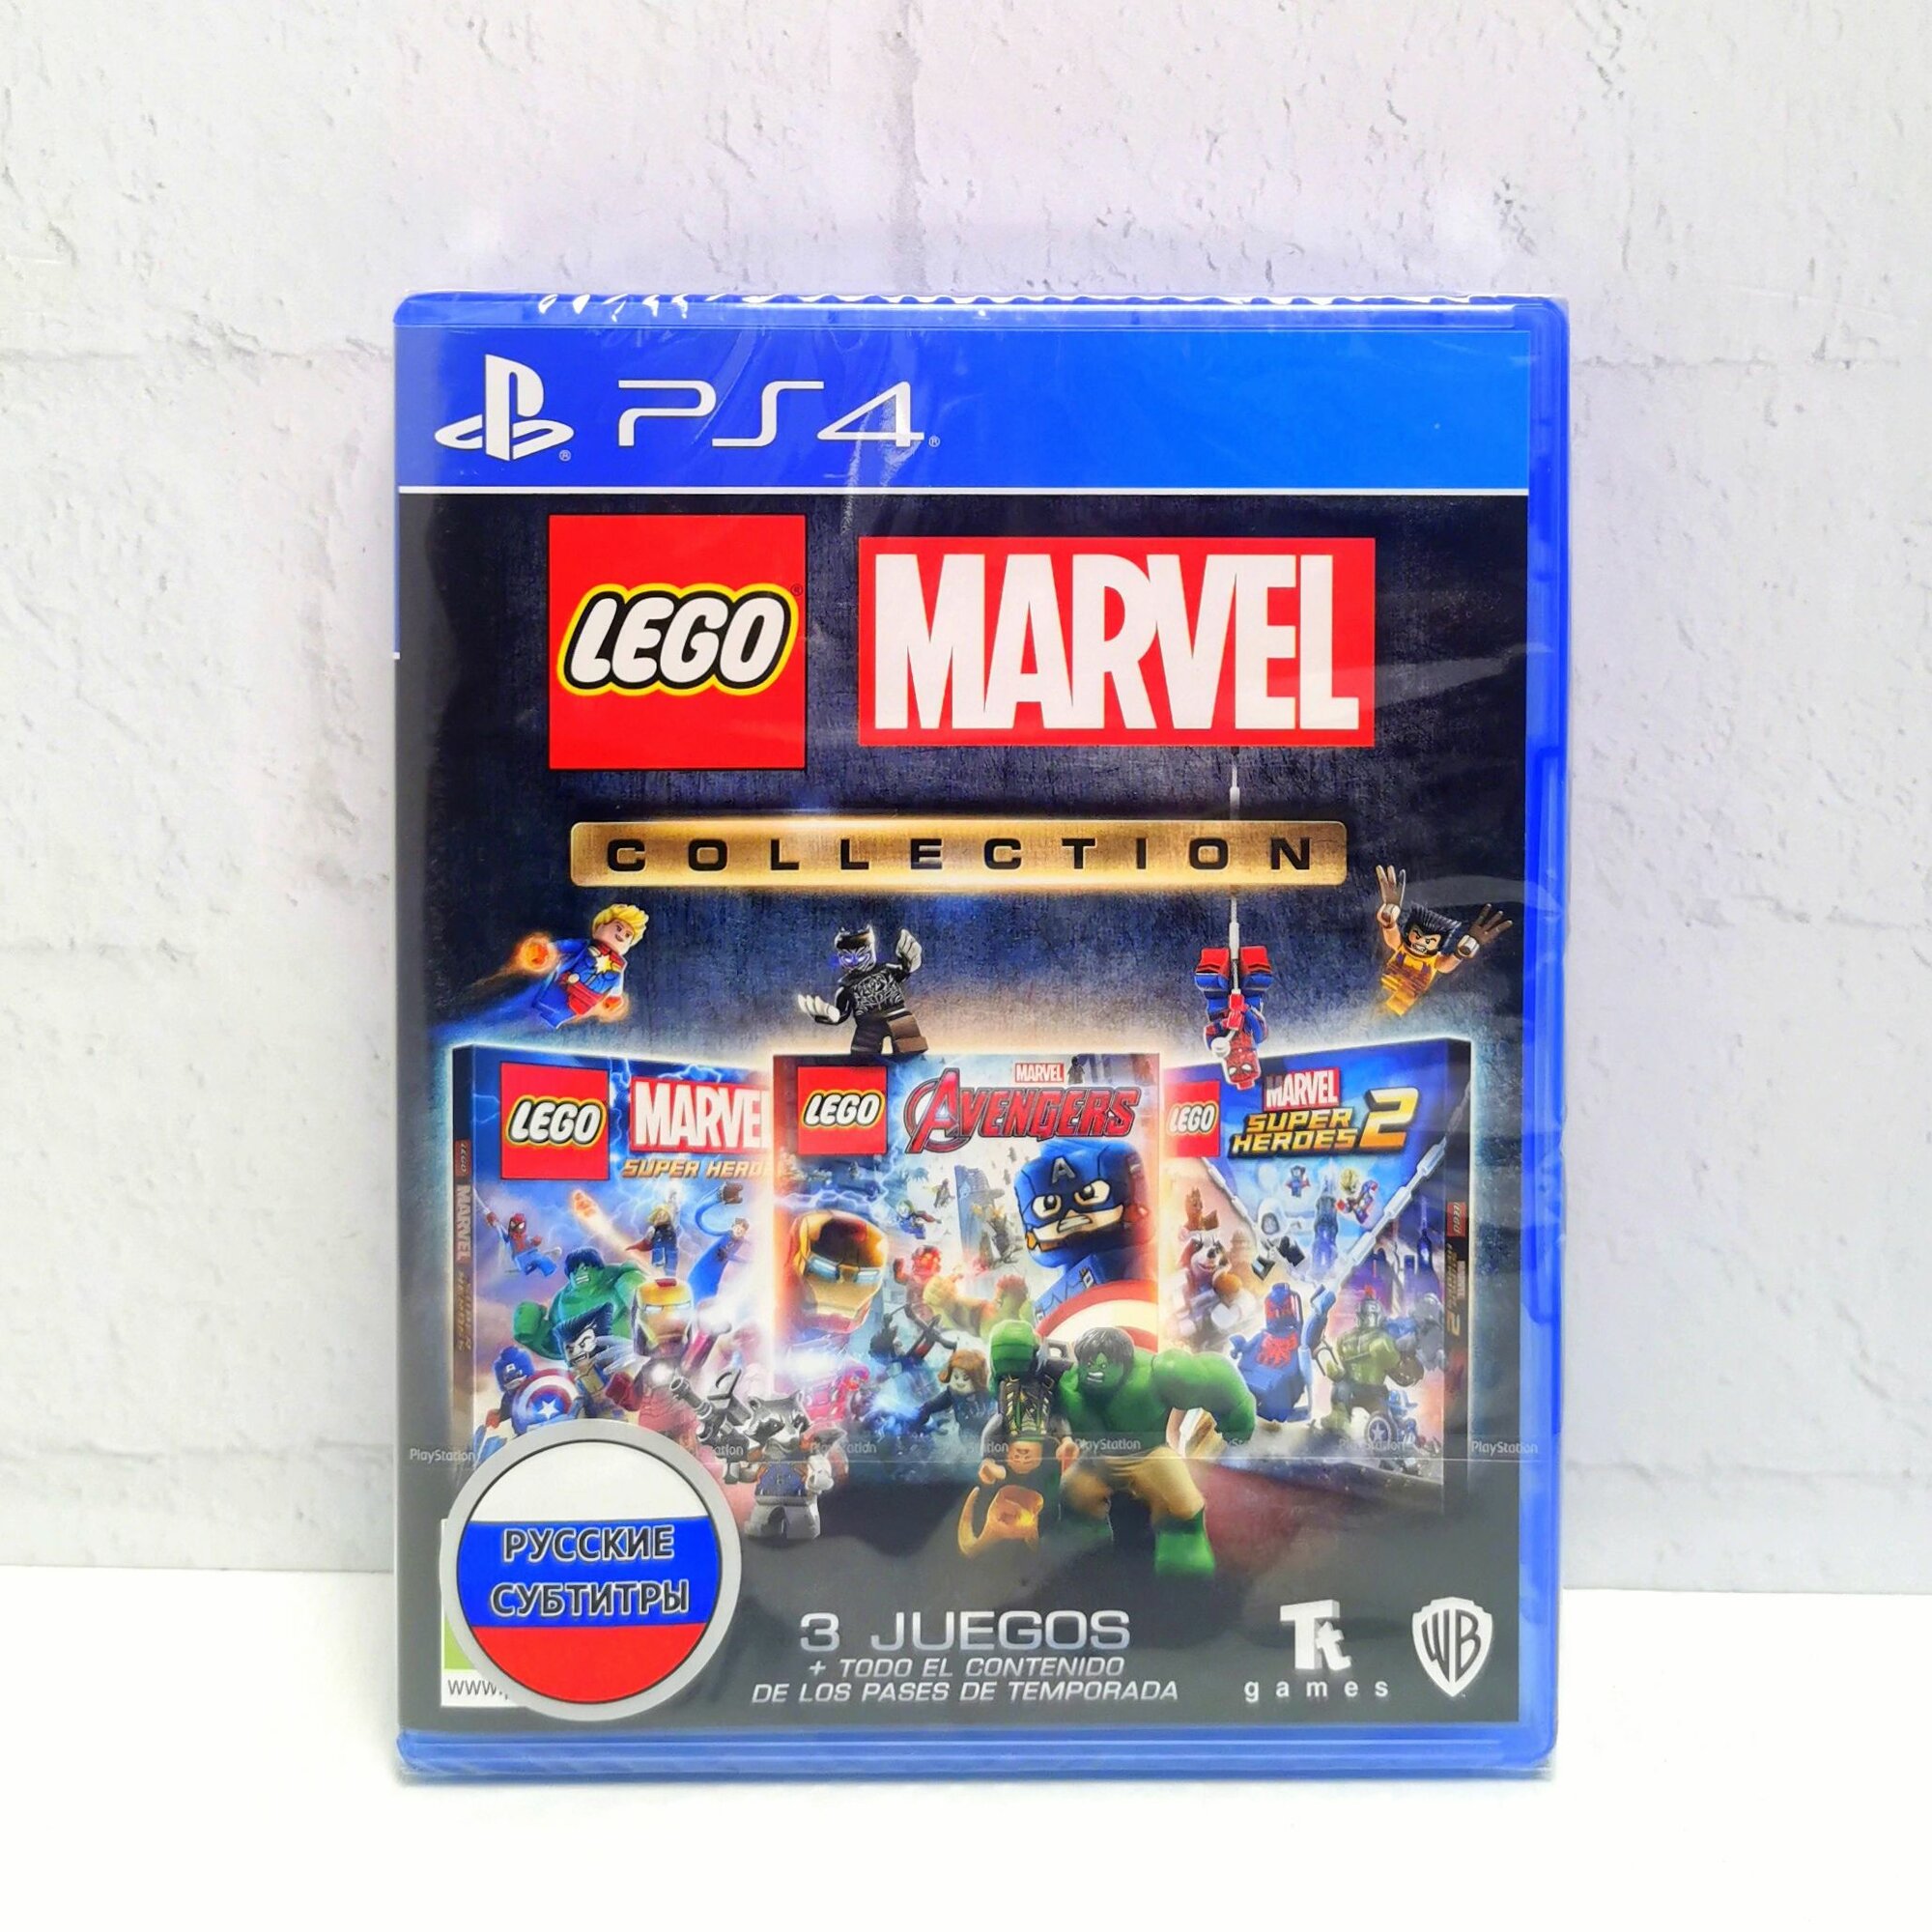 LEGO Marvel Collection Русские субтитры Видеоигра на диске PS4 / PS5